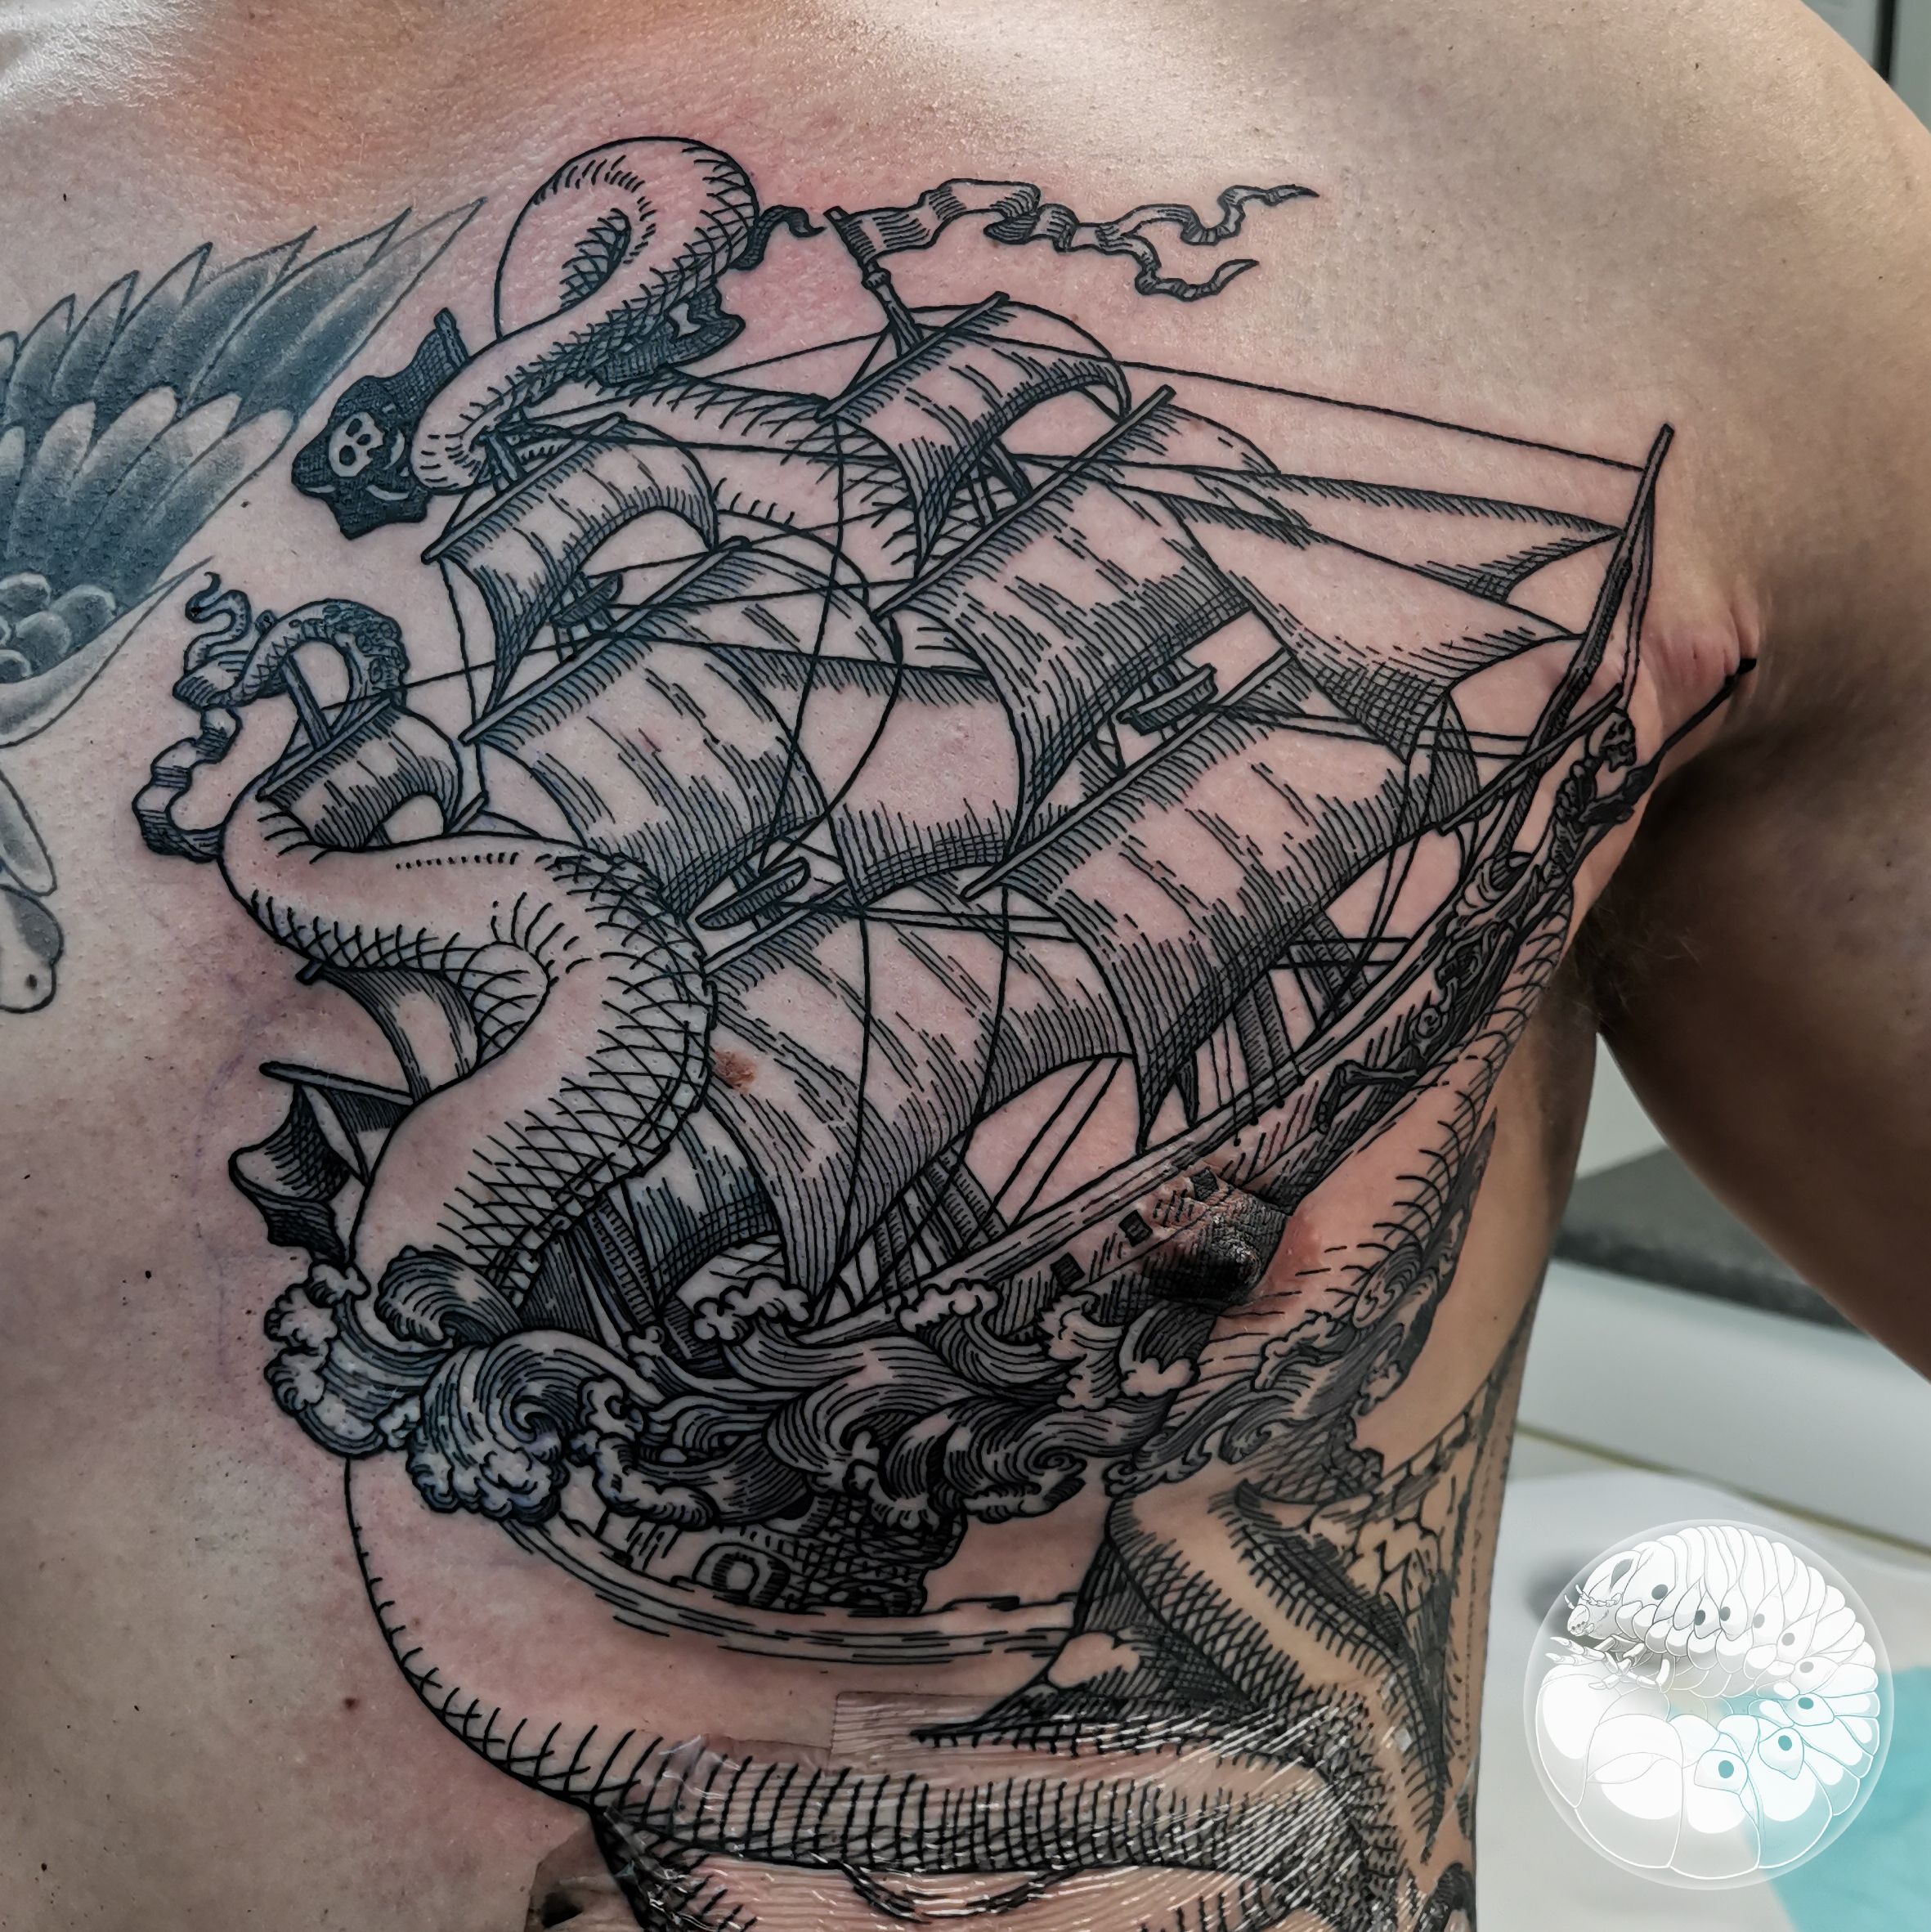 Octopus and Pirate Ship Tattoos Las Vegas